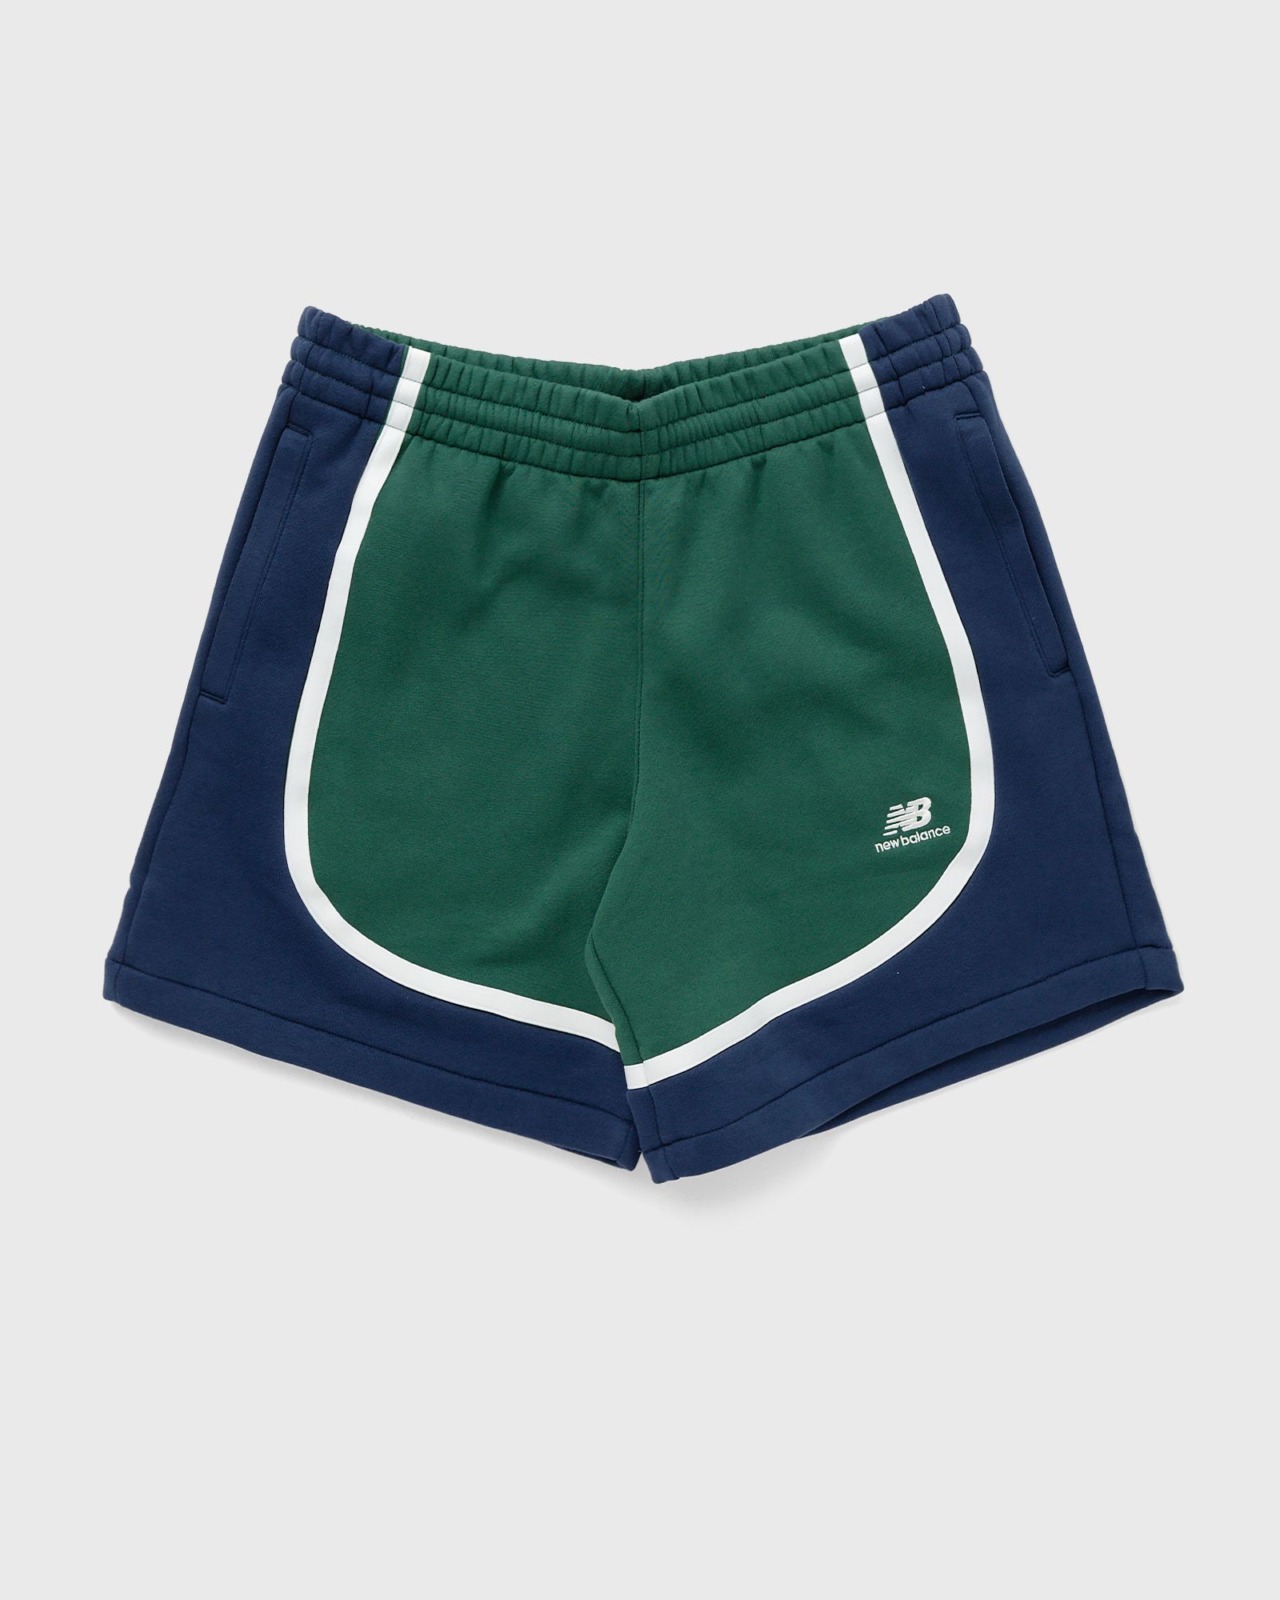 Bstn - Men's Shorts - Green - New Balance GOOFASH